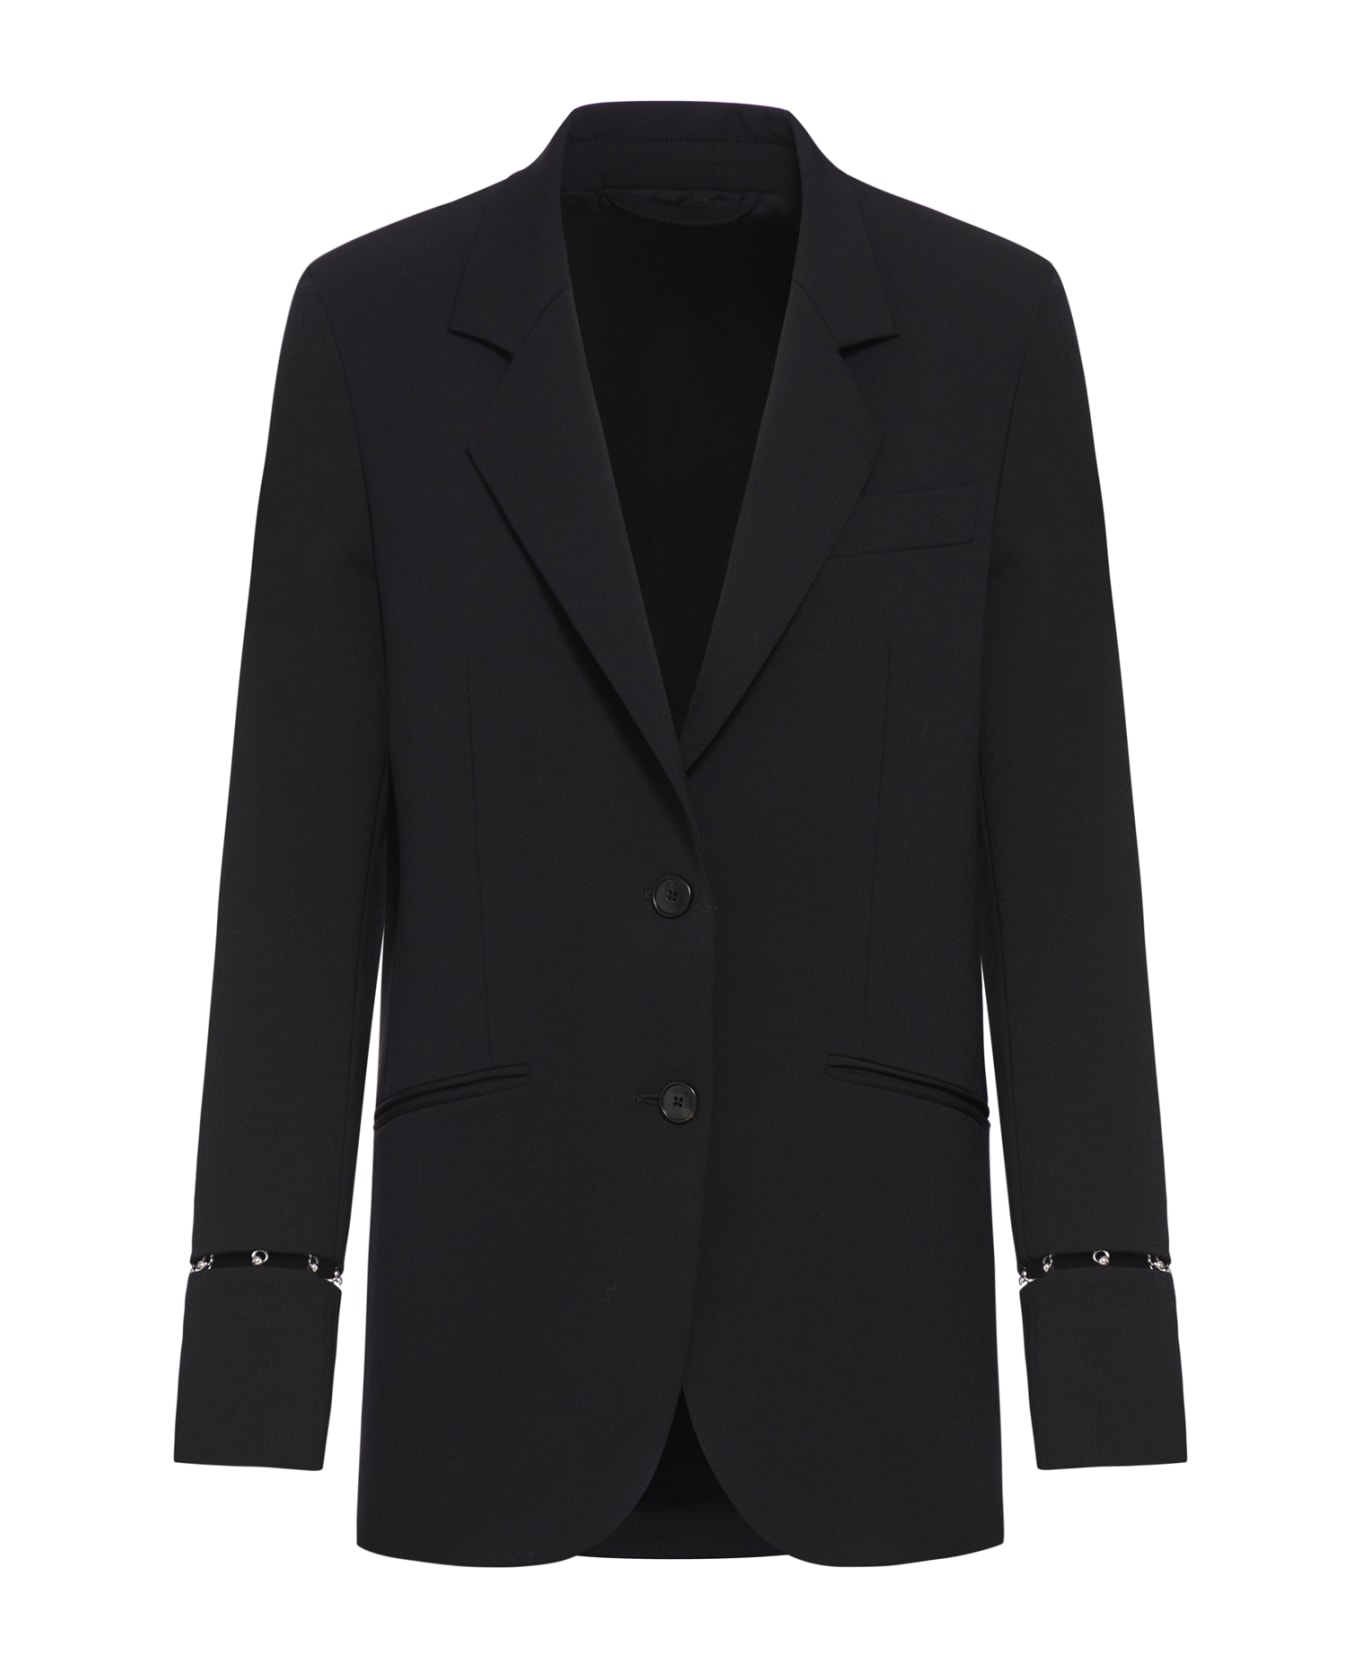 Del Core Single Breasted Tailored Jacket With Mushroom Hook Detail On Sleeves - Black